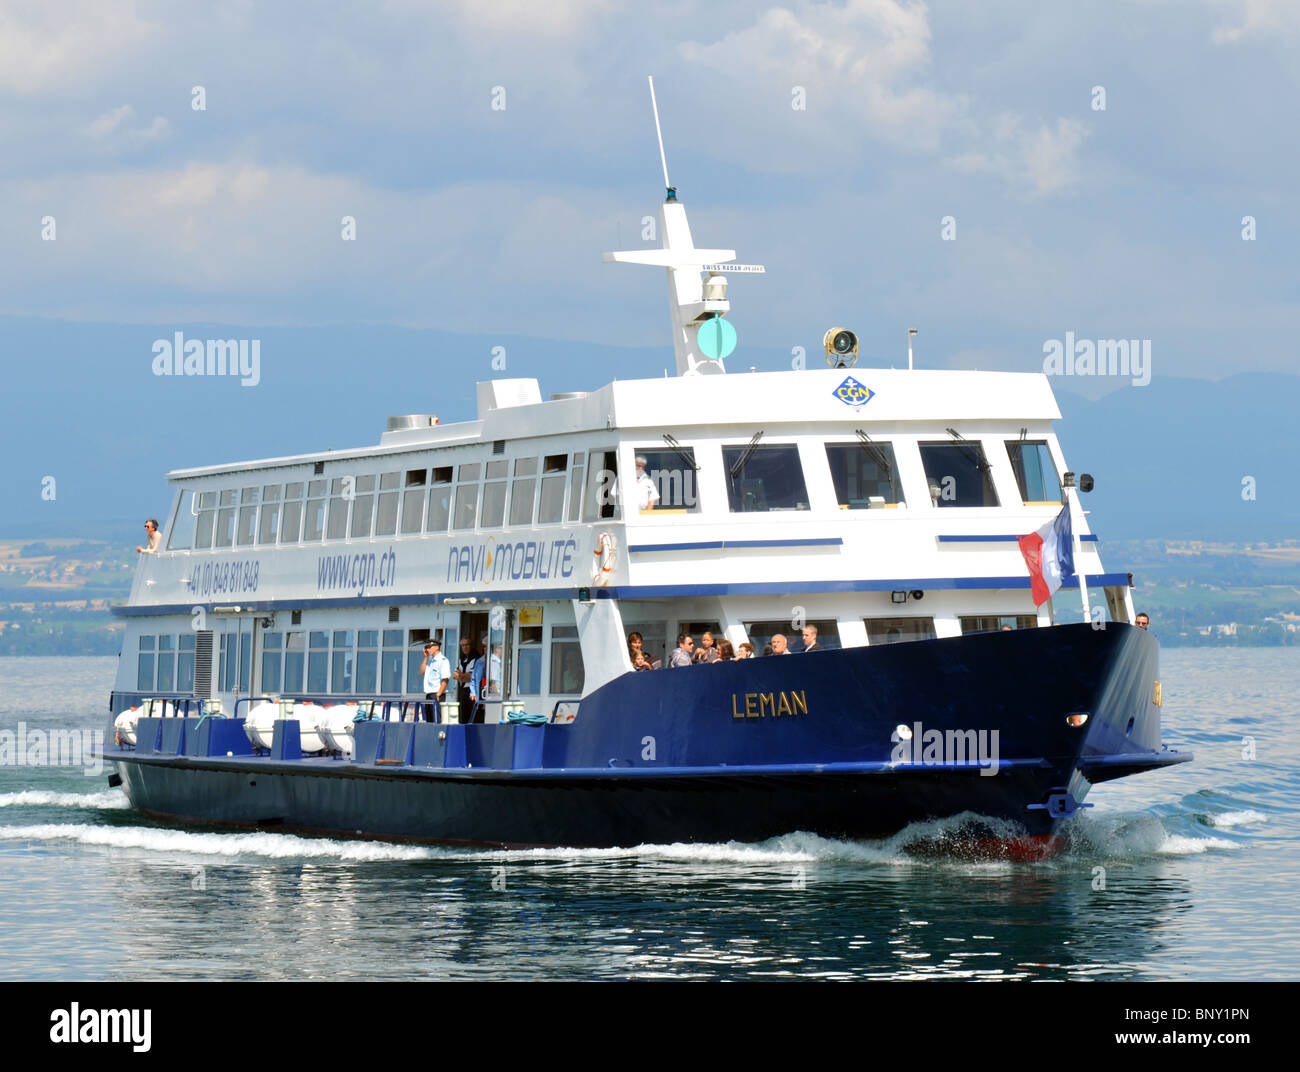 Passenger ferry, Lake at Evian, France Stock Photo